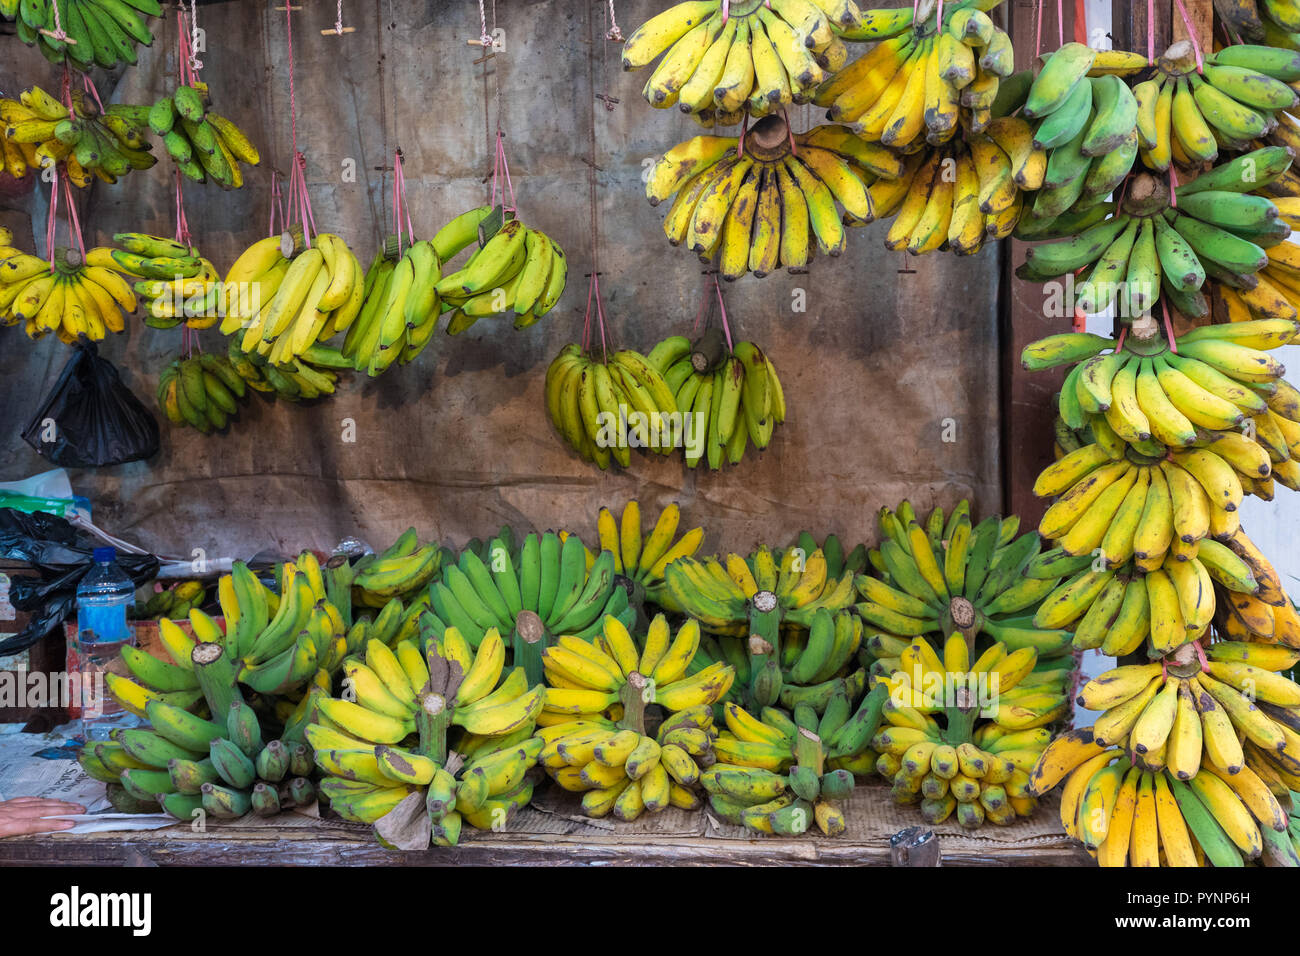 Banana street shop in Jakarta, Indonesia Stock Photo - Alamy